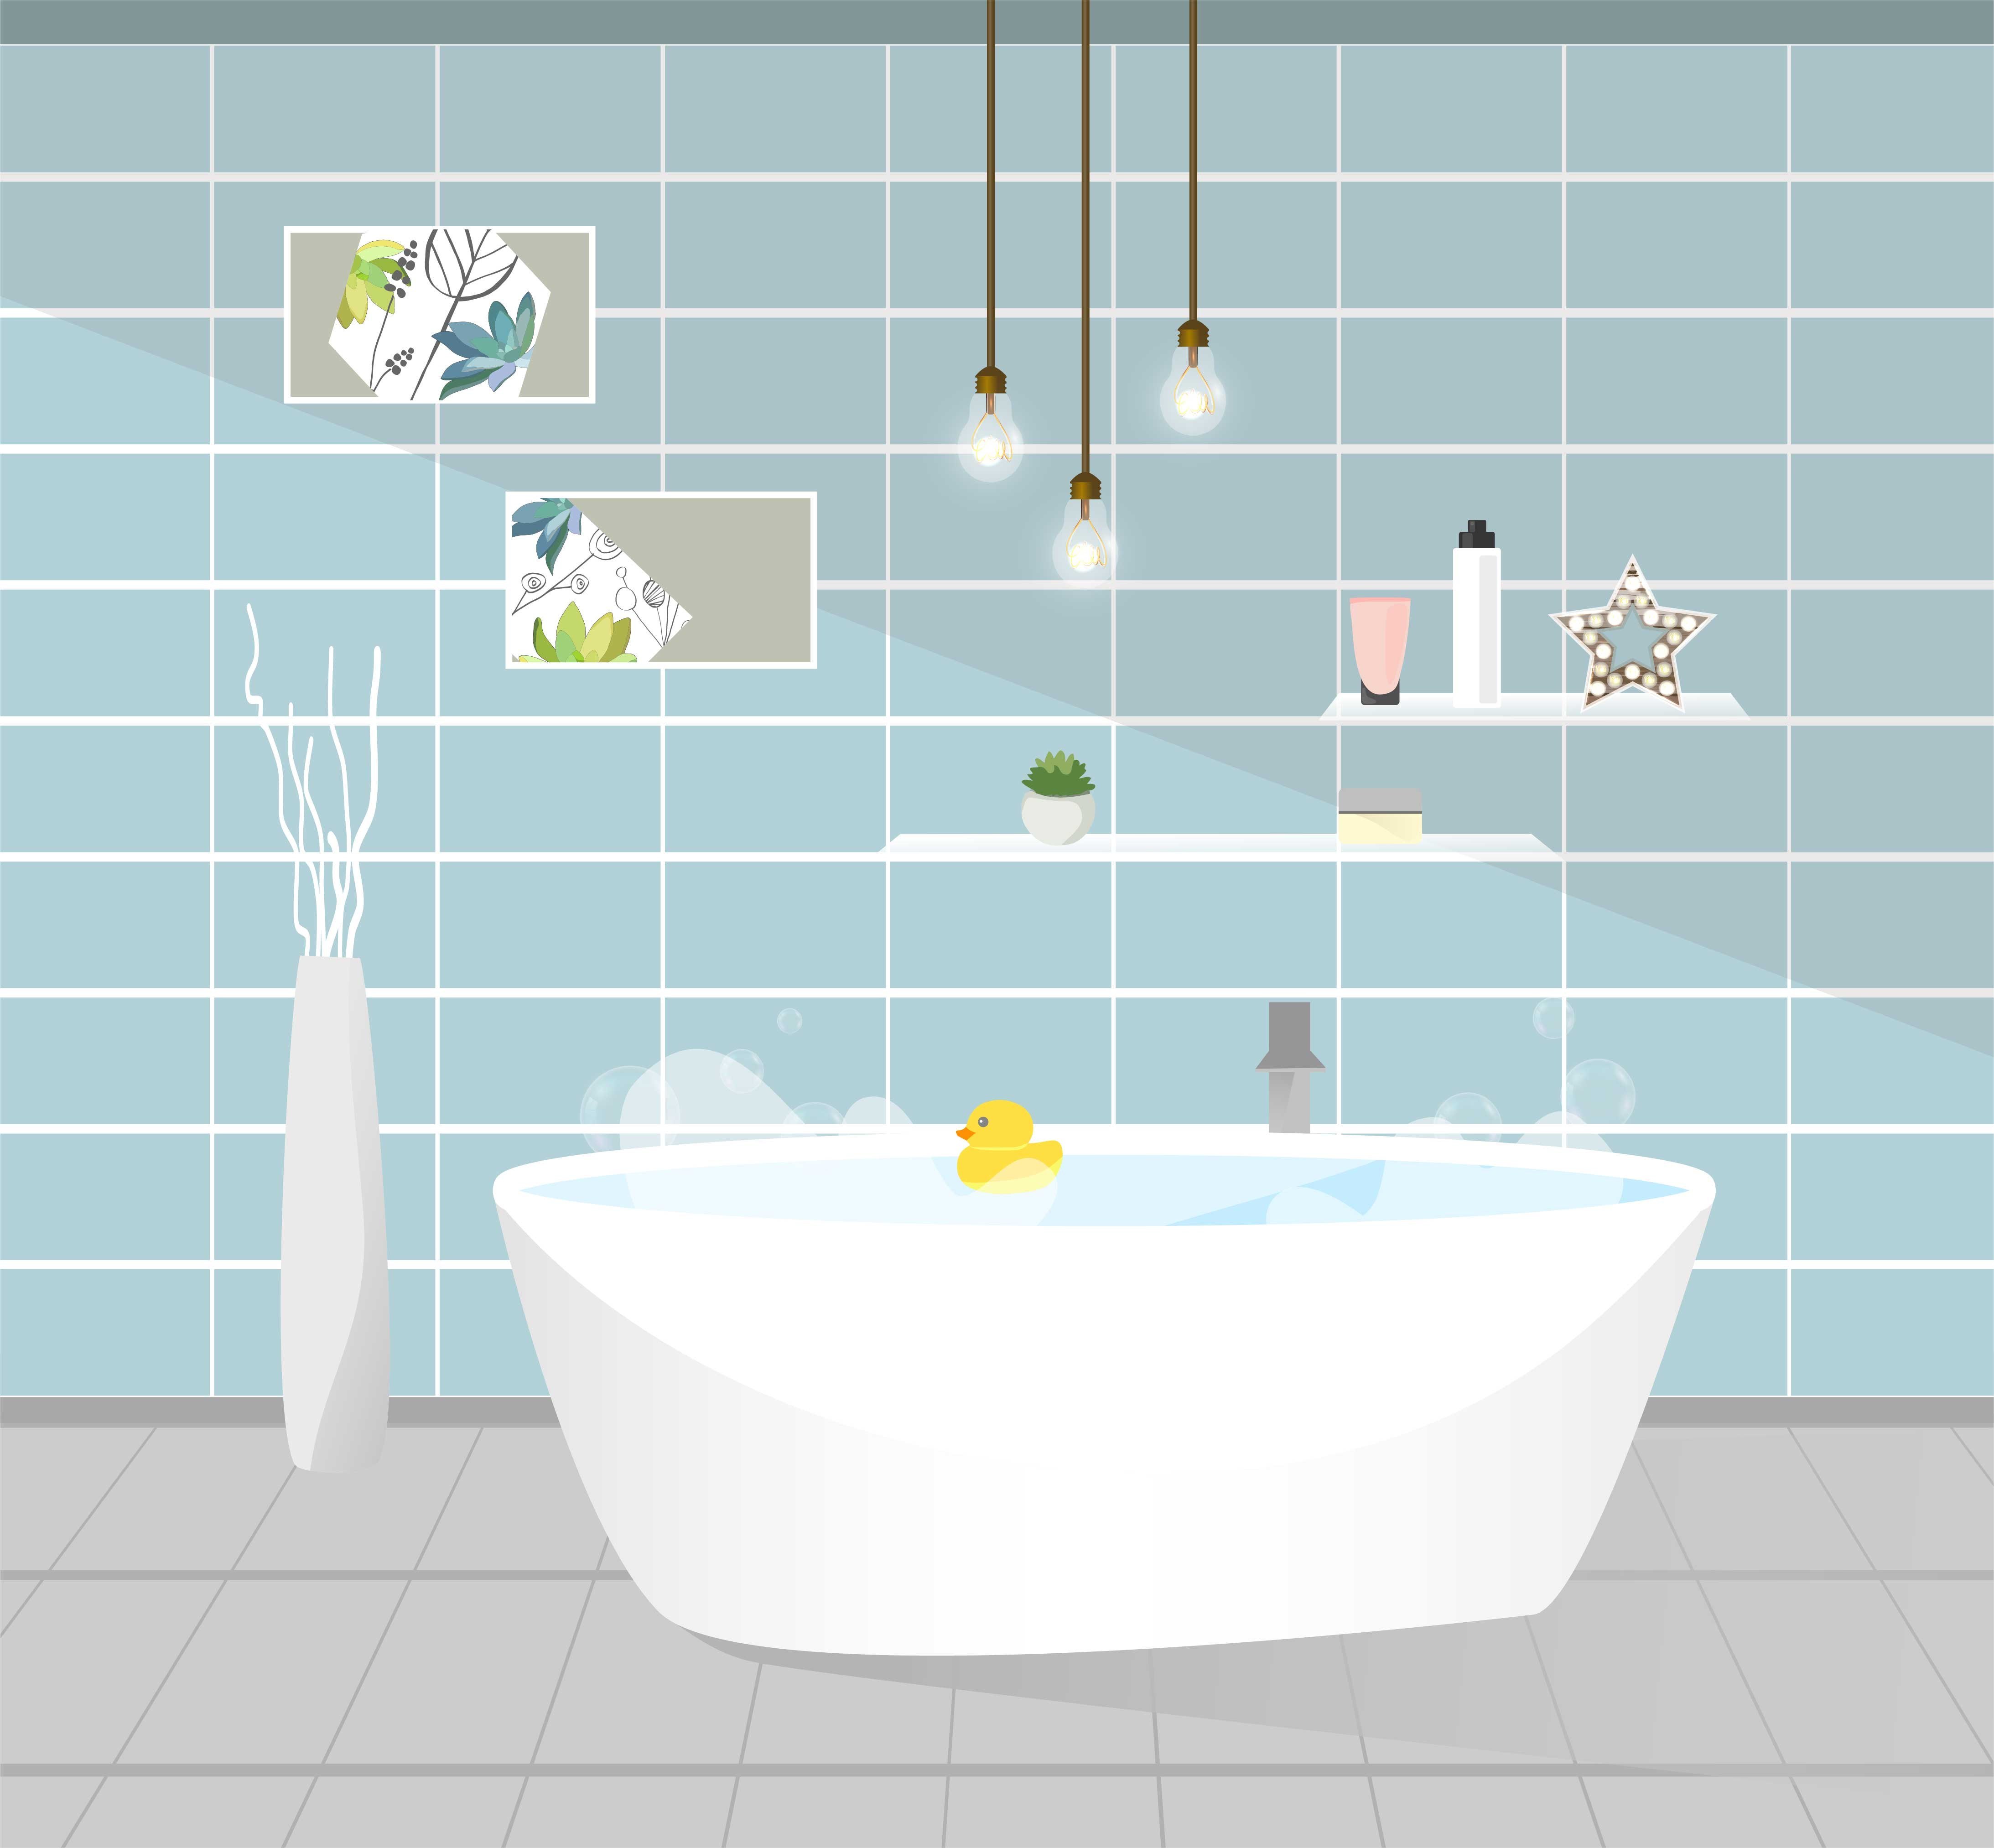 Покажи картинку ванной. Ванная иллюстрация. Ванная комната мультяшная. Ванная комната мультяшка. Фон ванная комната для детей.